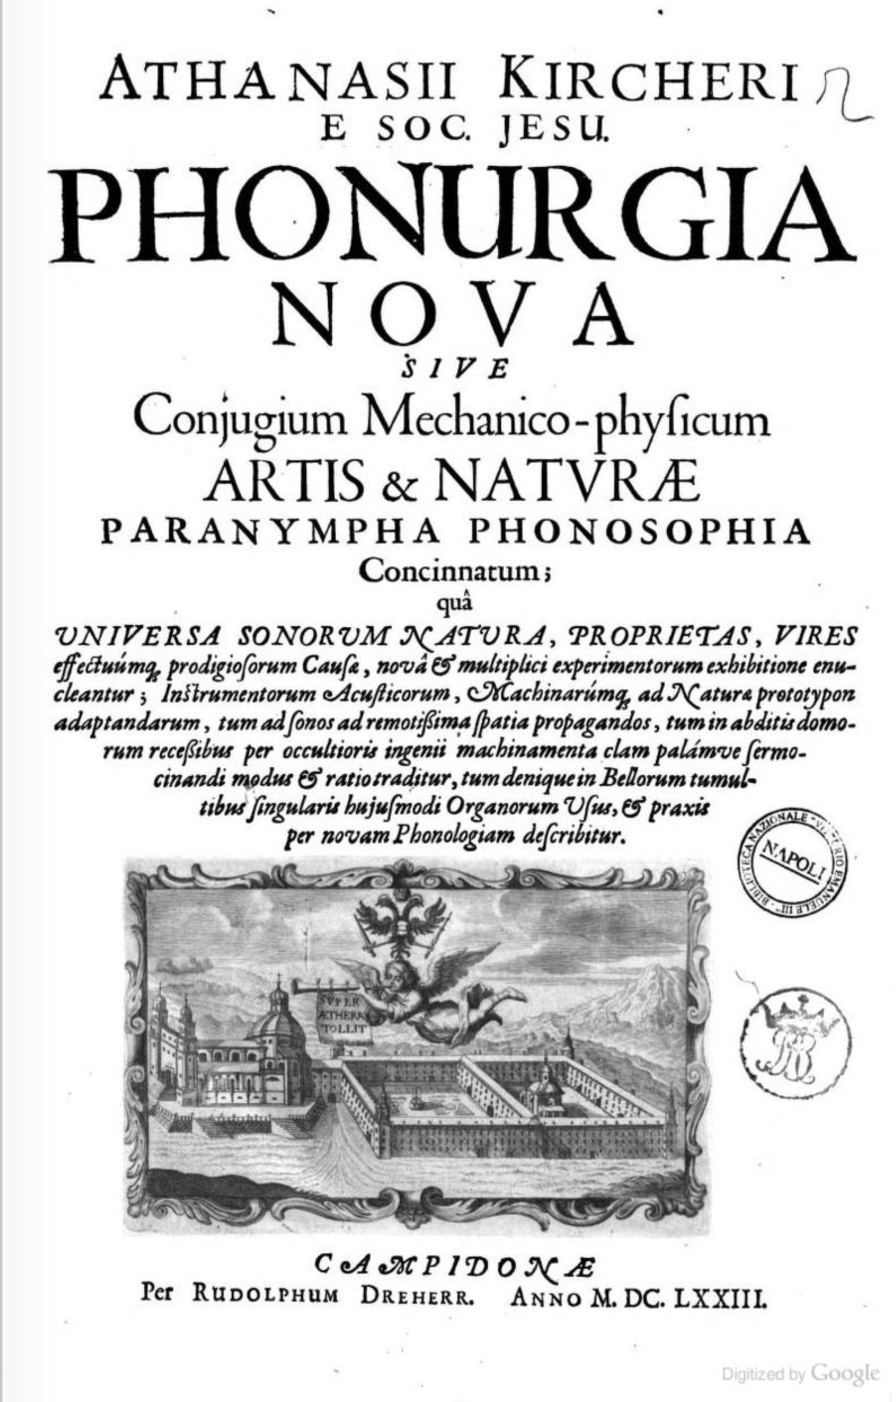 Phonurgia Nova